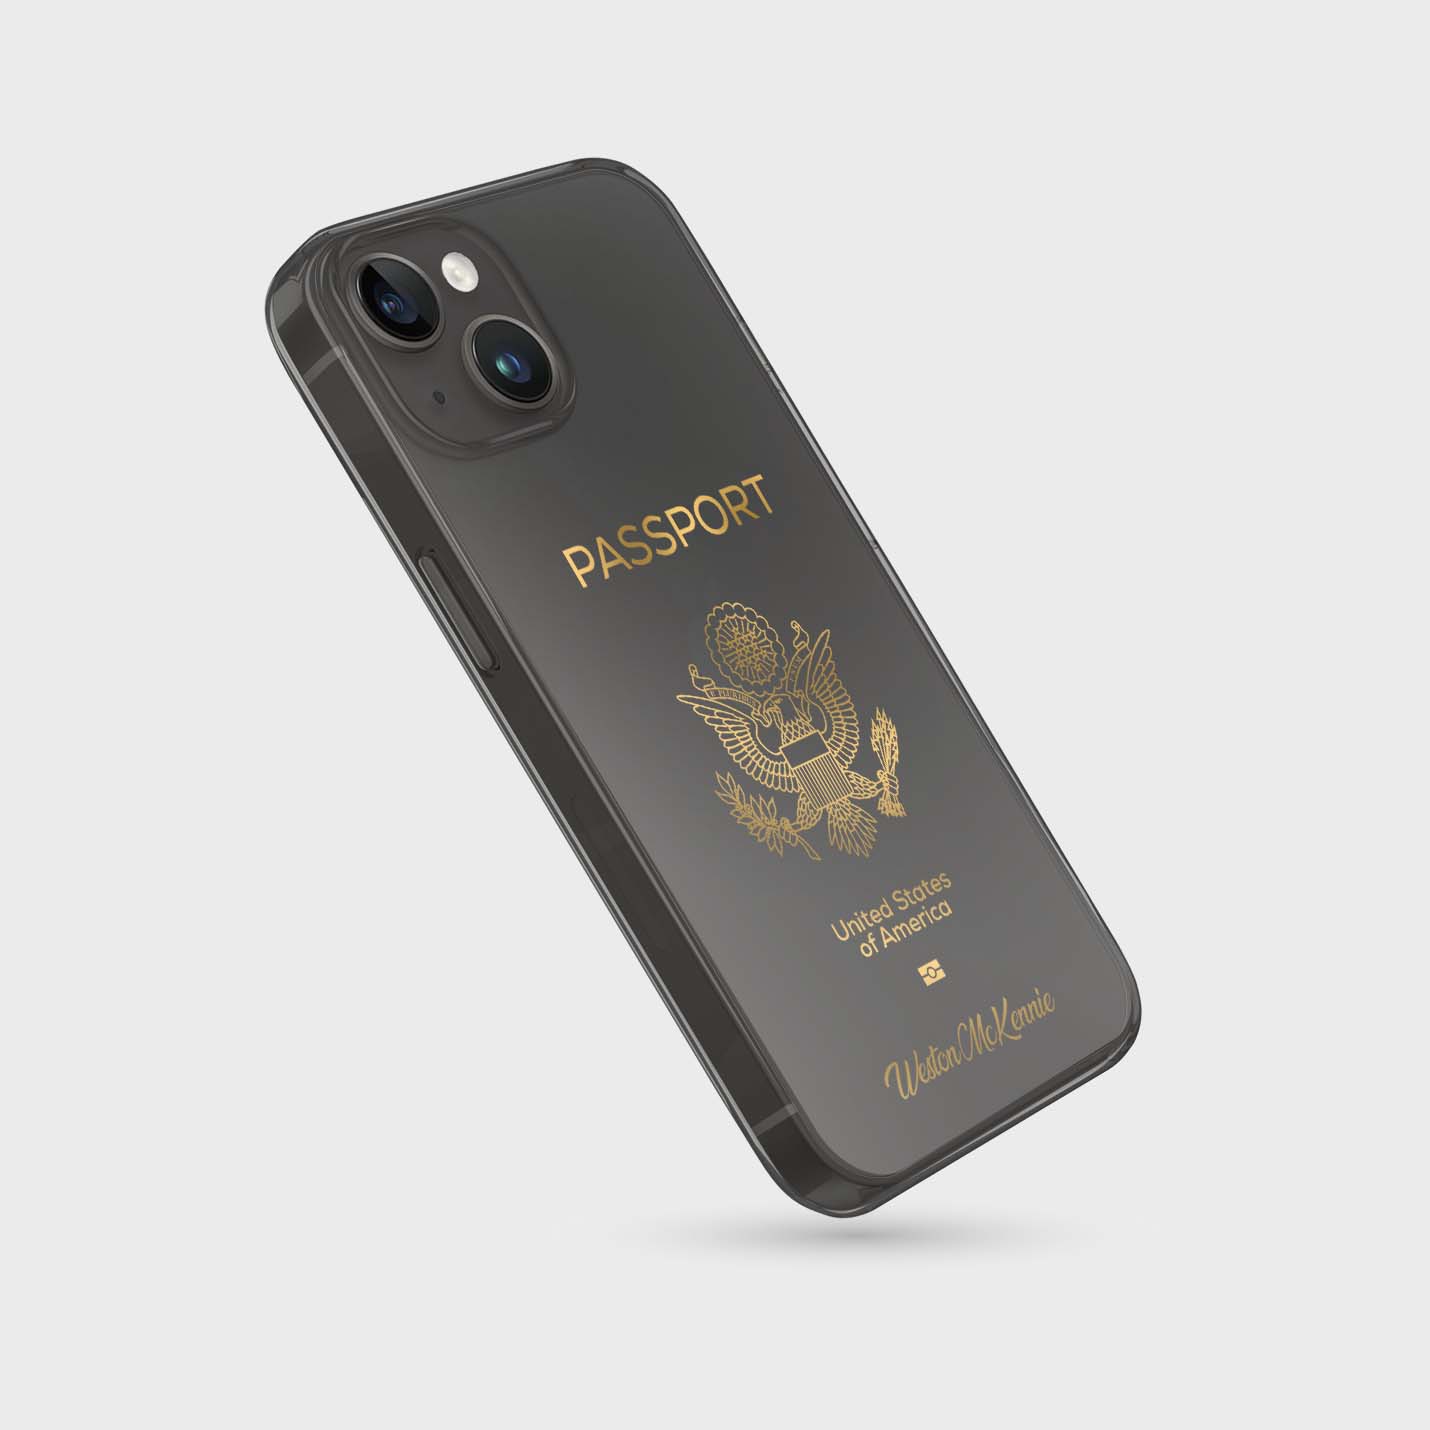 Handyhüllen mit Reisepass - United States of America (USA) - 1instaphone